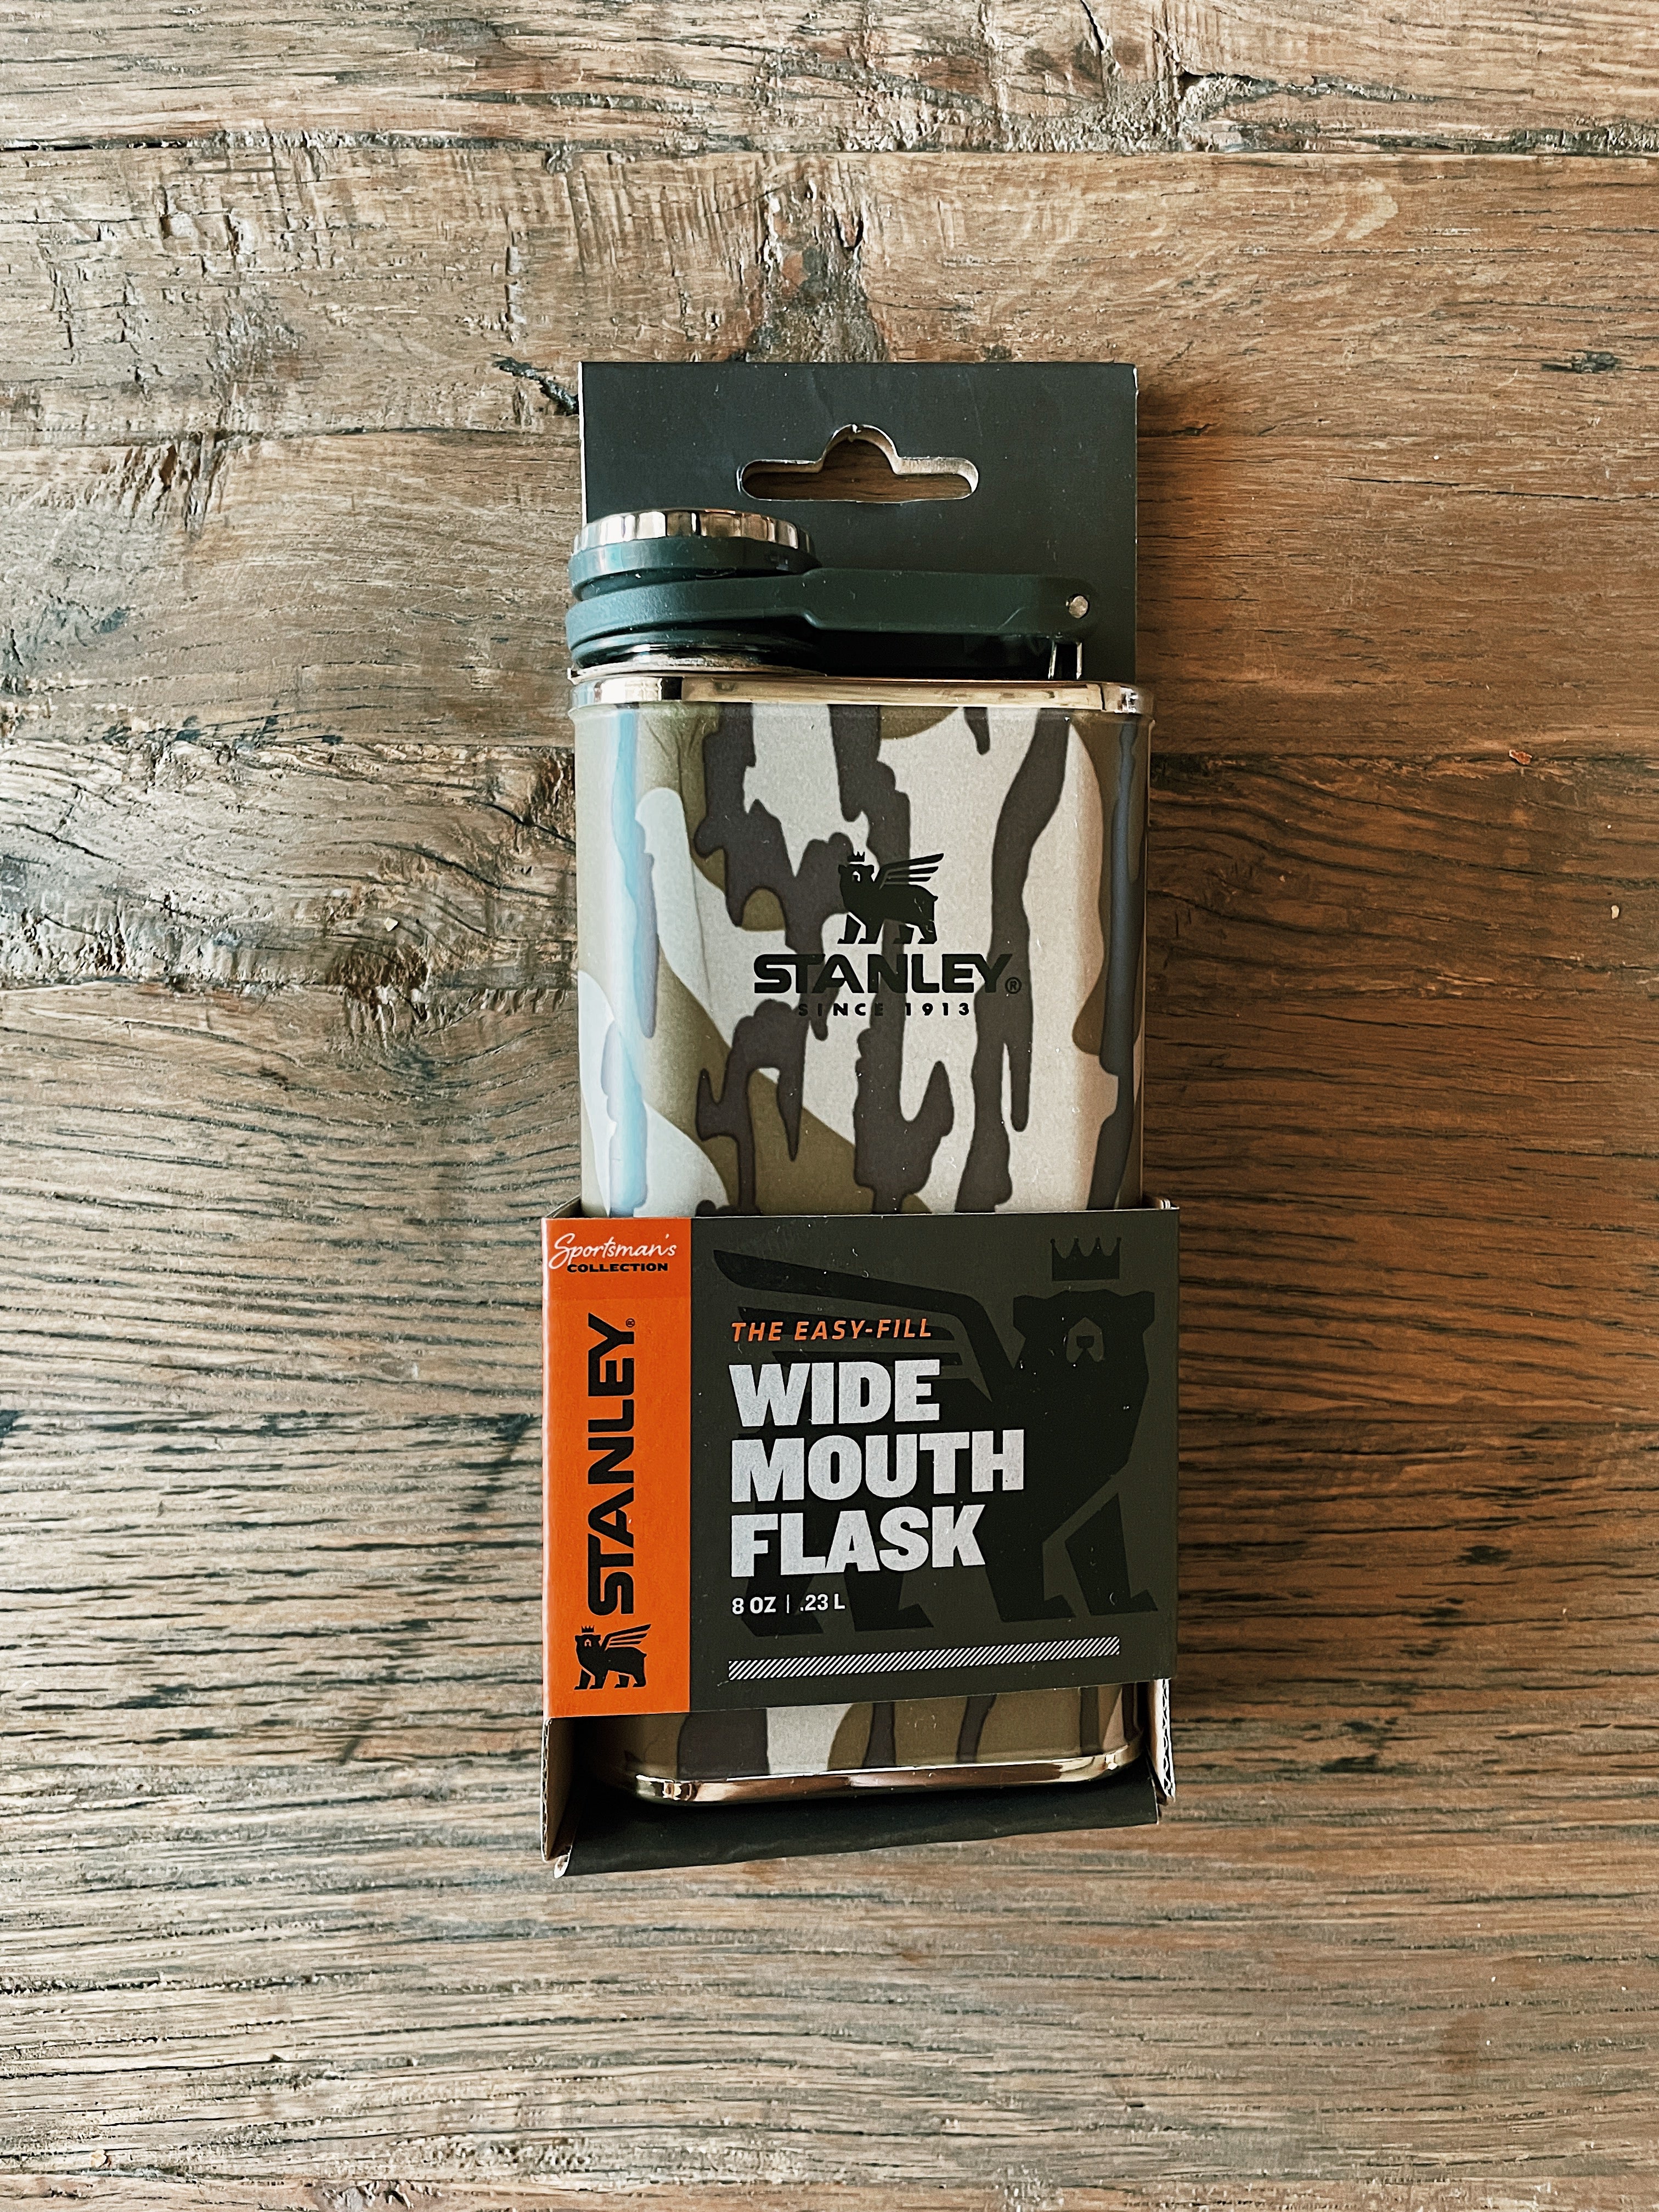 Stanley Classic Easy Fill Wide Mouth Flask | 8 oz (Blaze Orange)